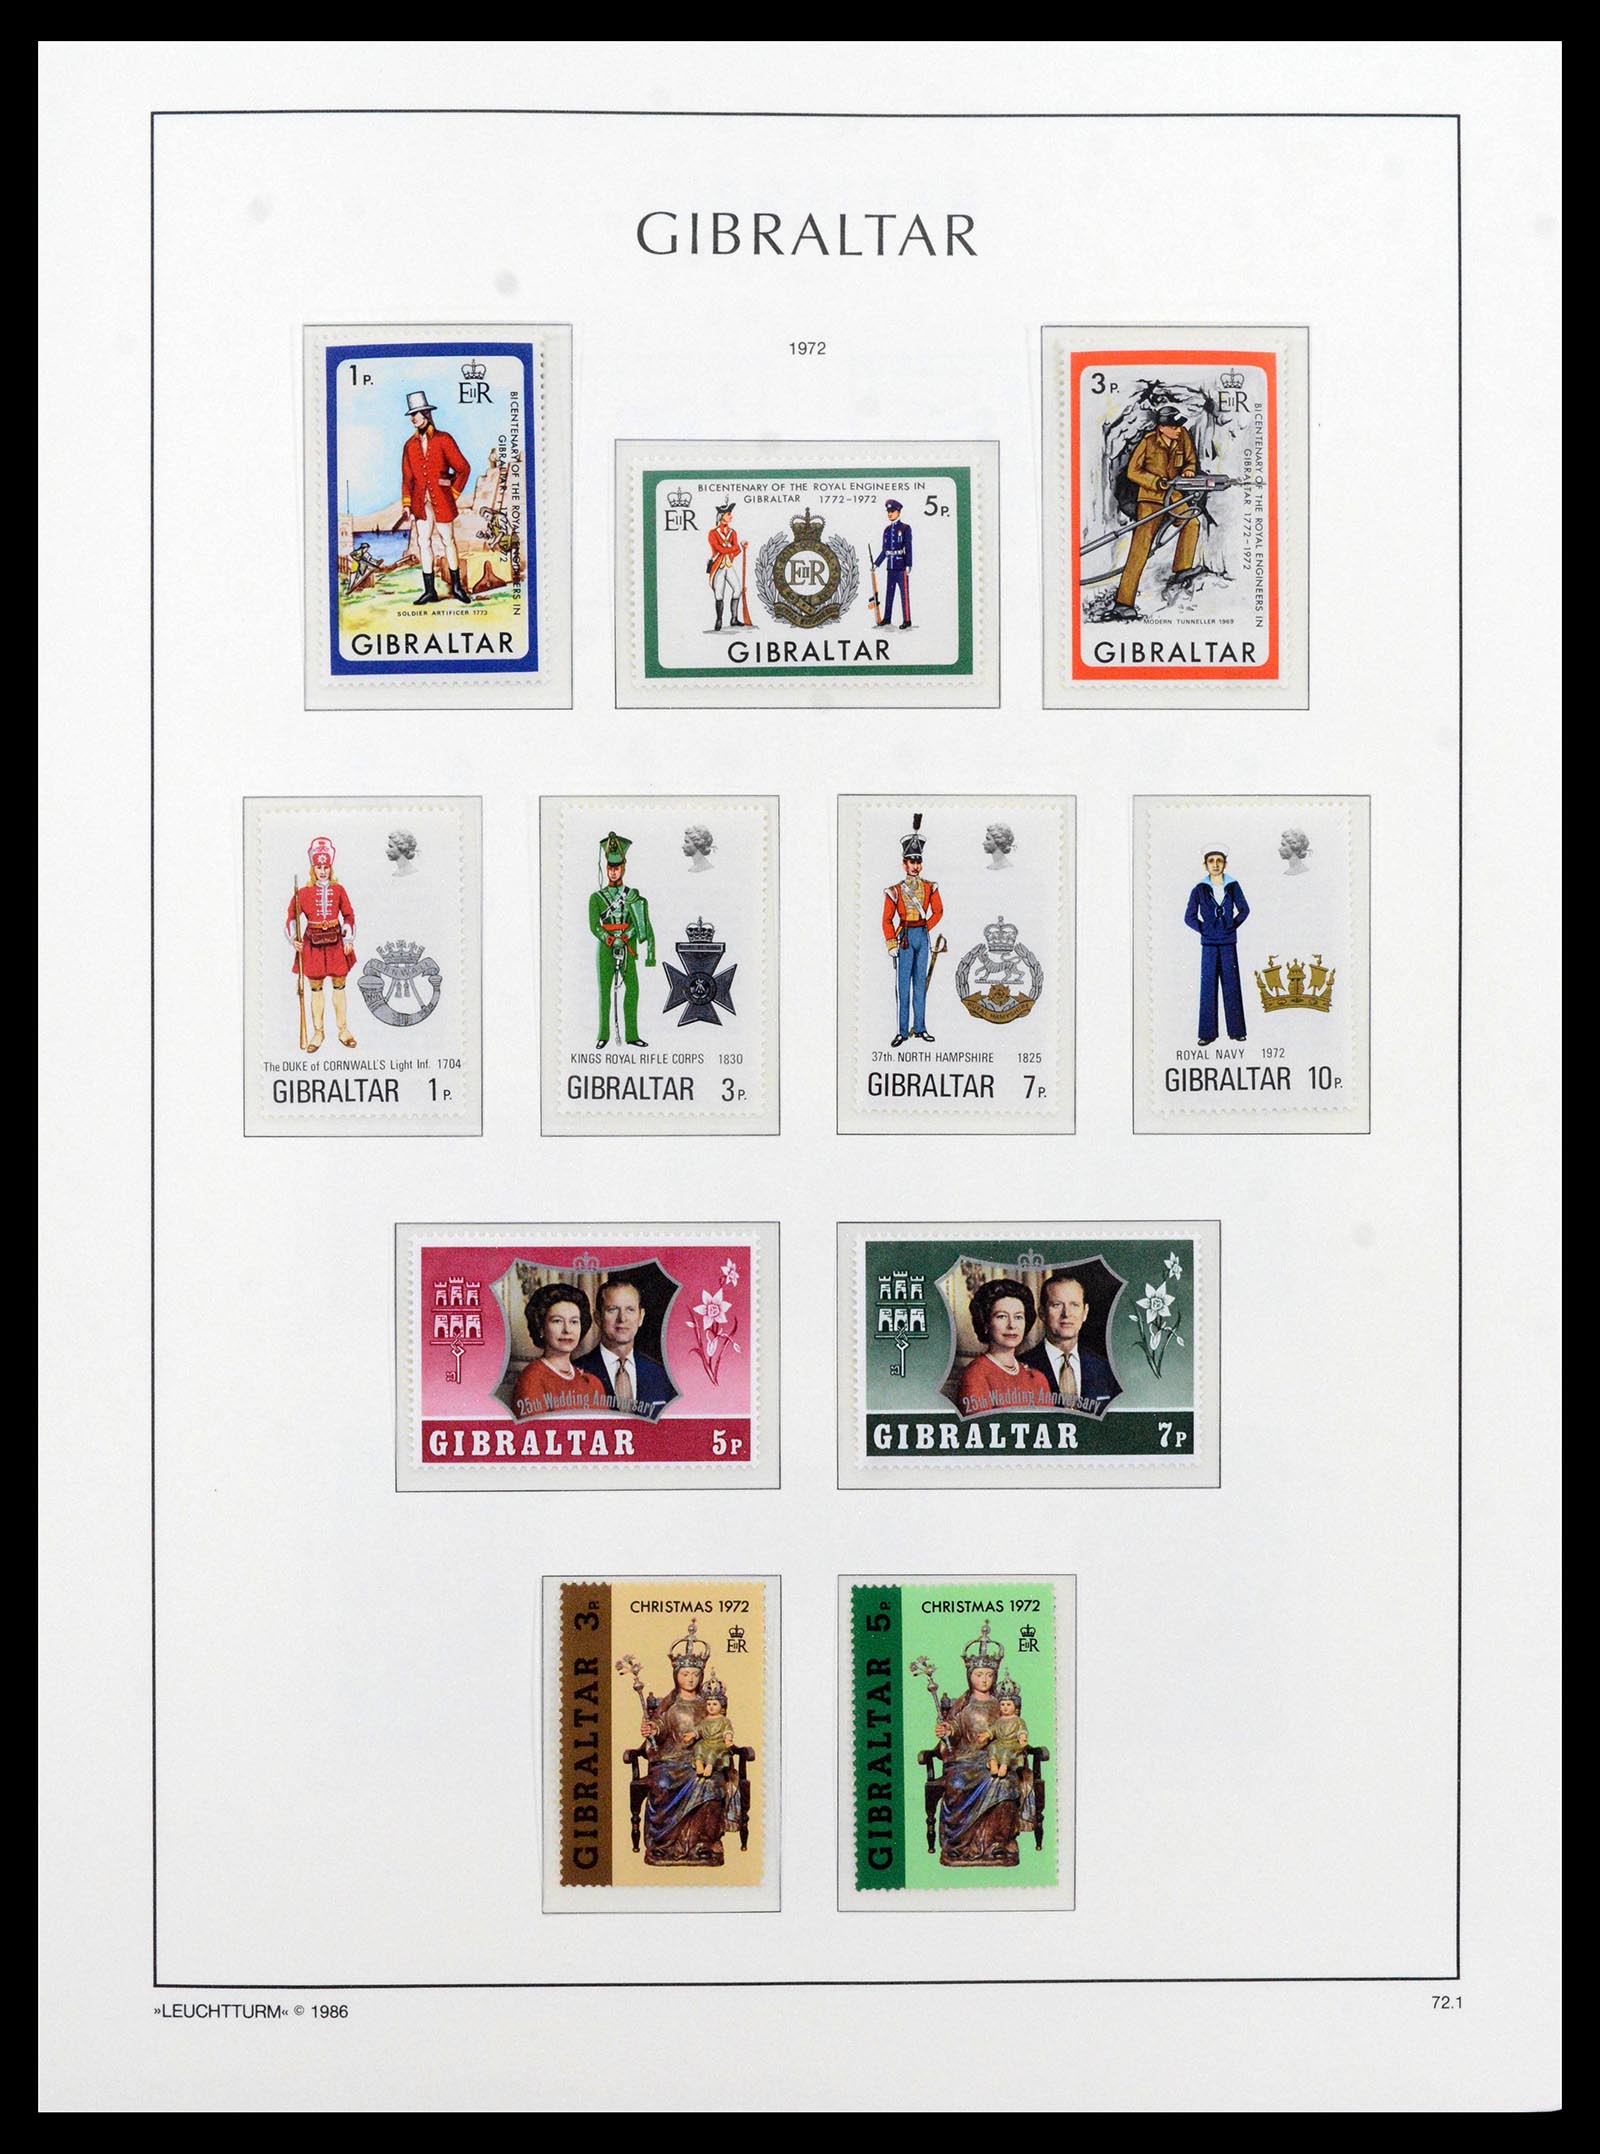 39158 0027 - Stamp collection 39158 Gibraltar 1886-2013.